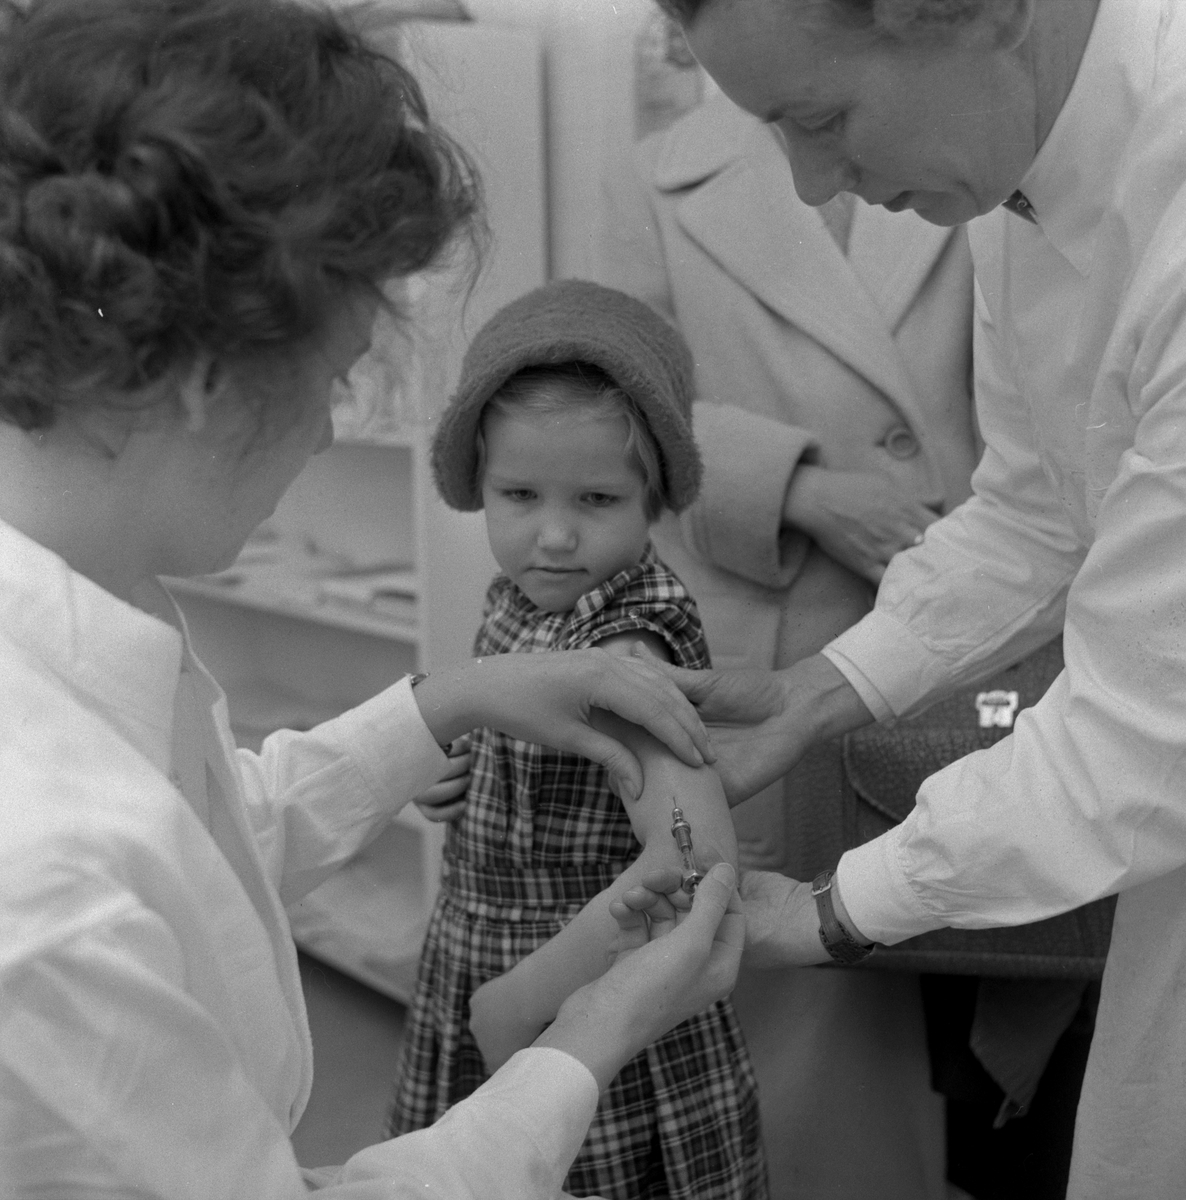 Polioympning.
14 april 1959.